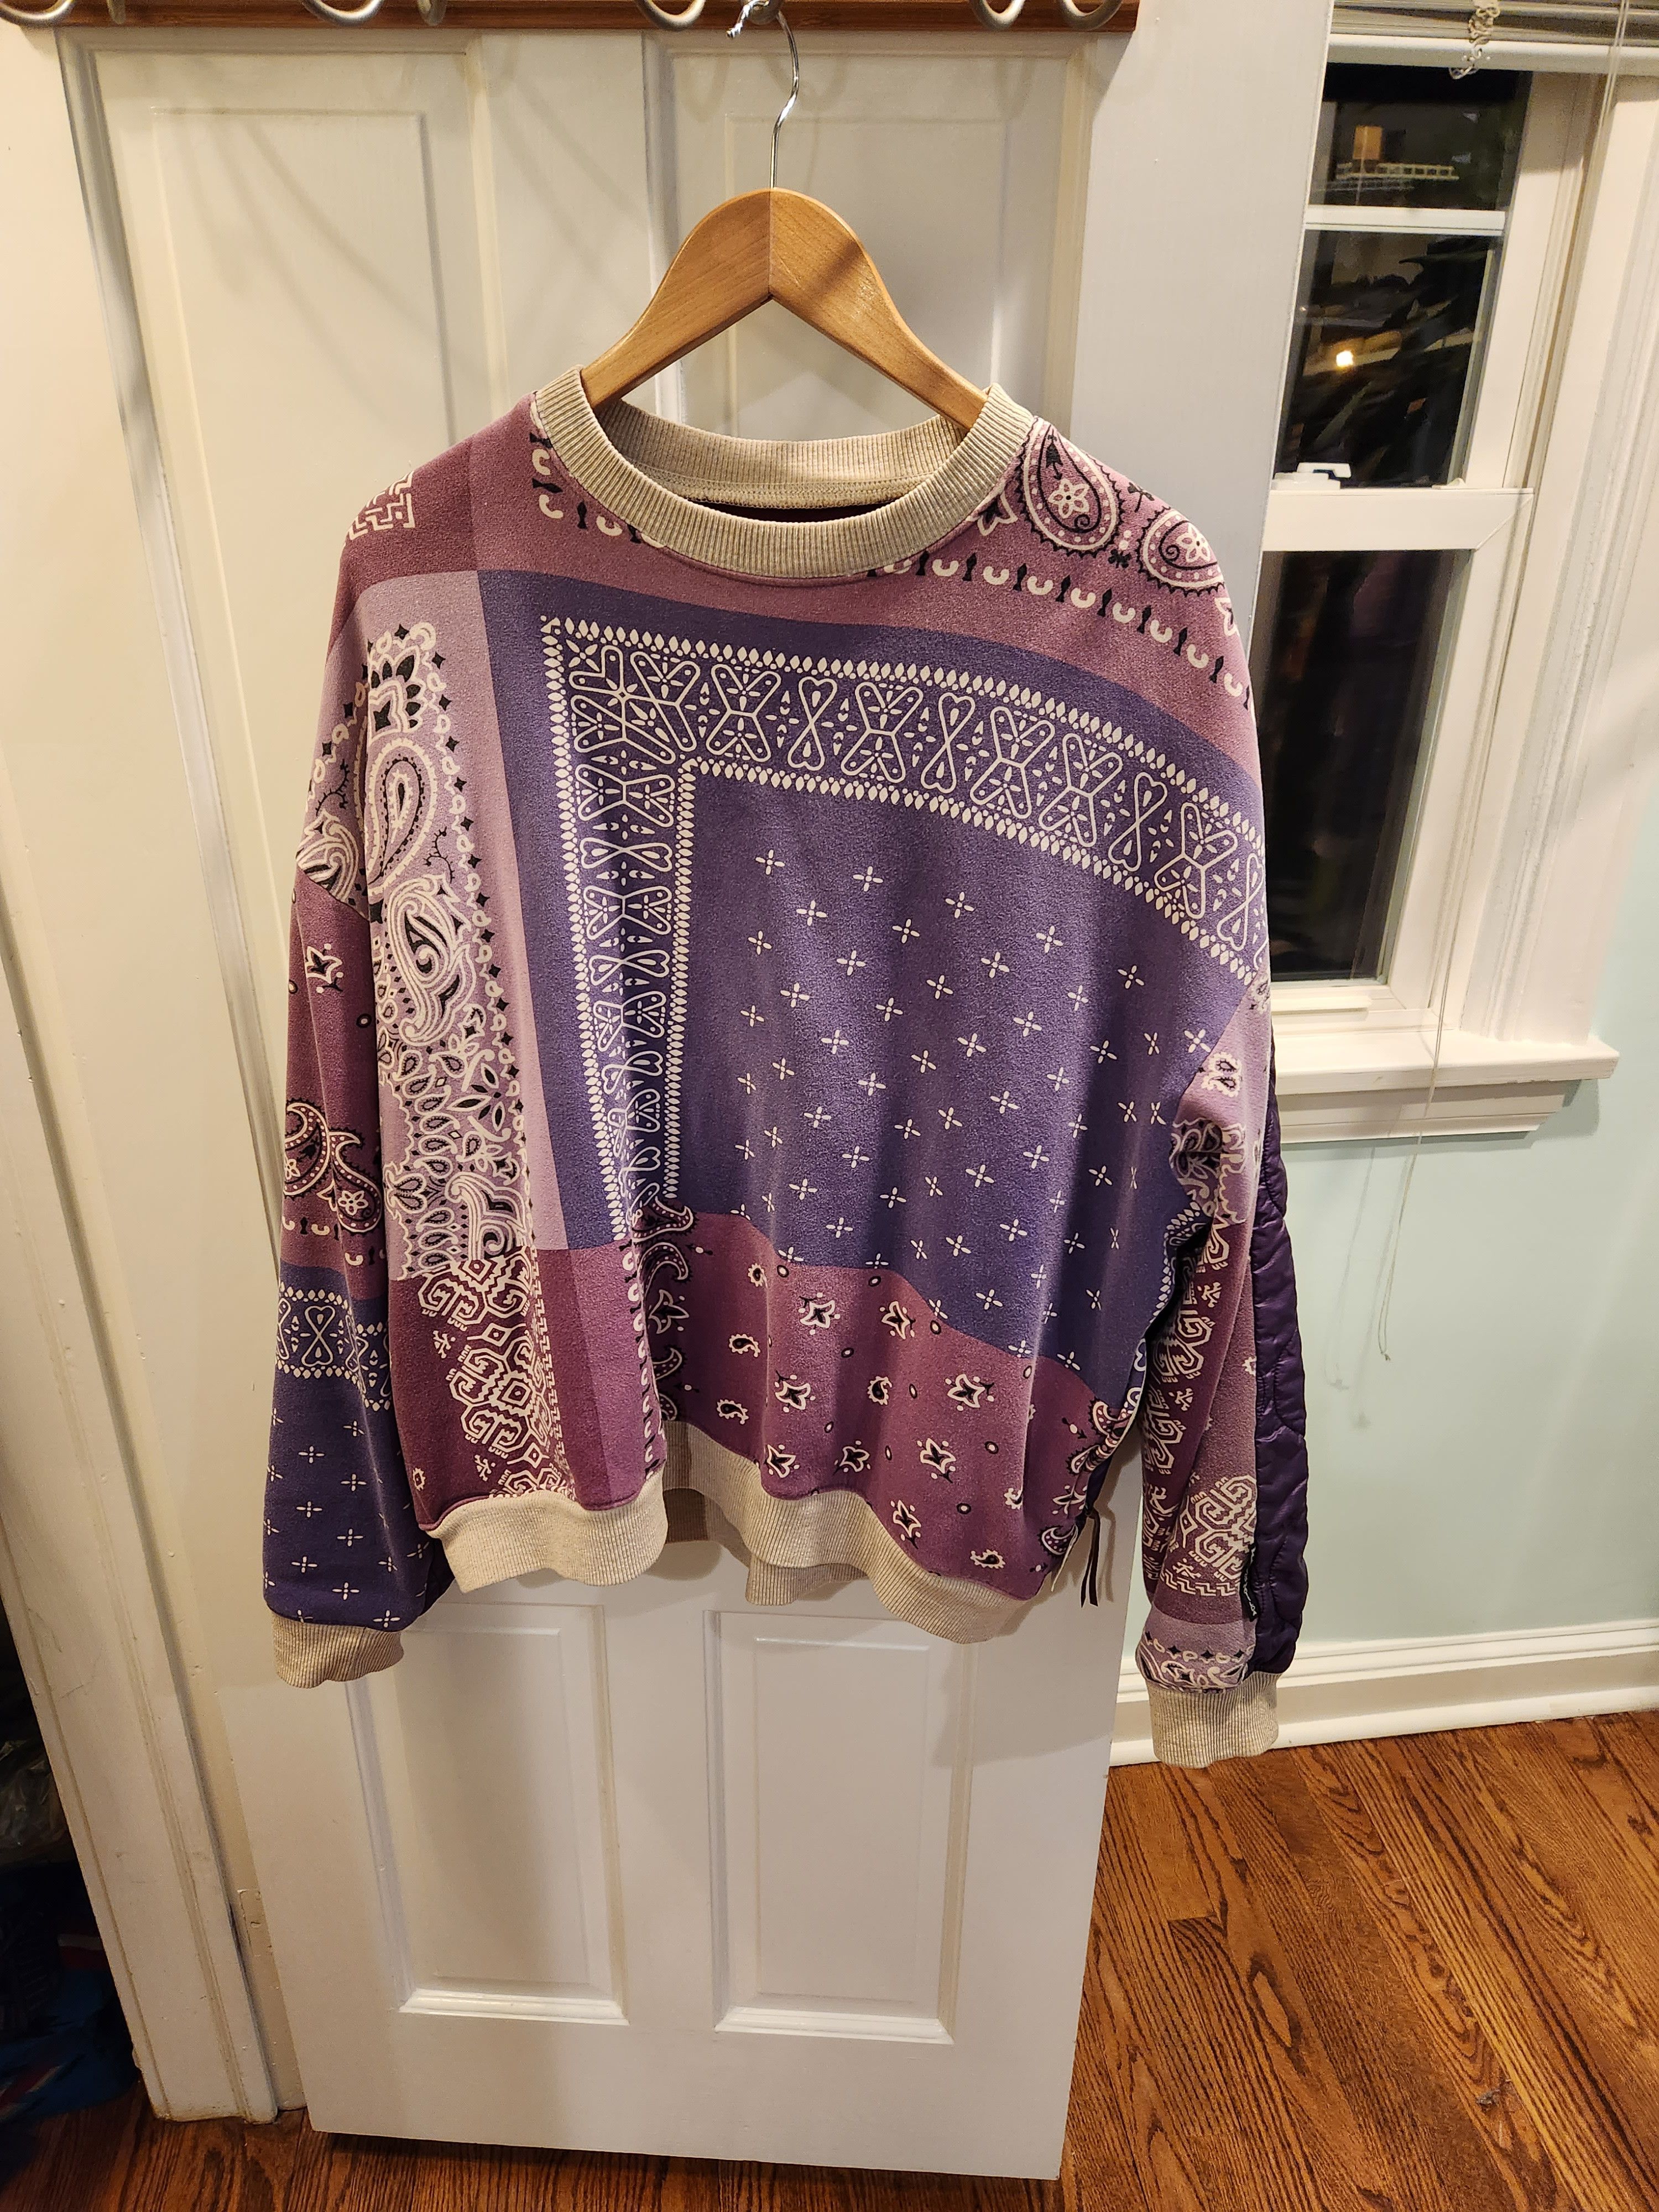 Kapital Fleecy Knit Bivouac Big Sweatshirt - Purple